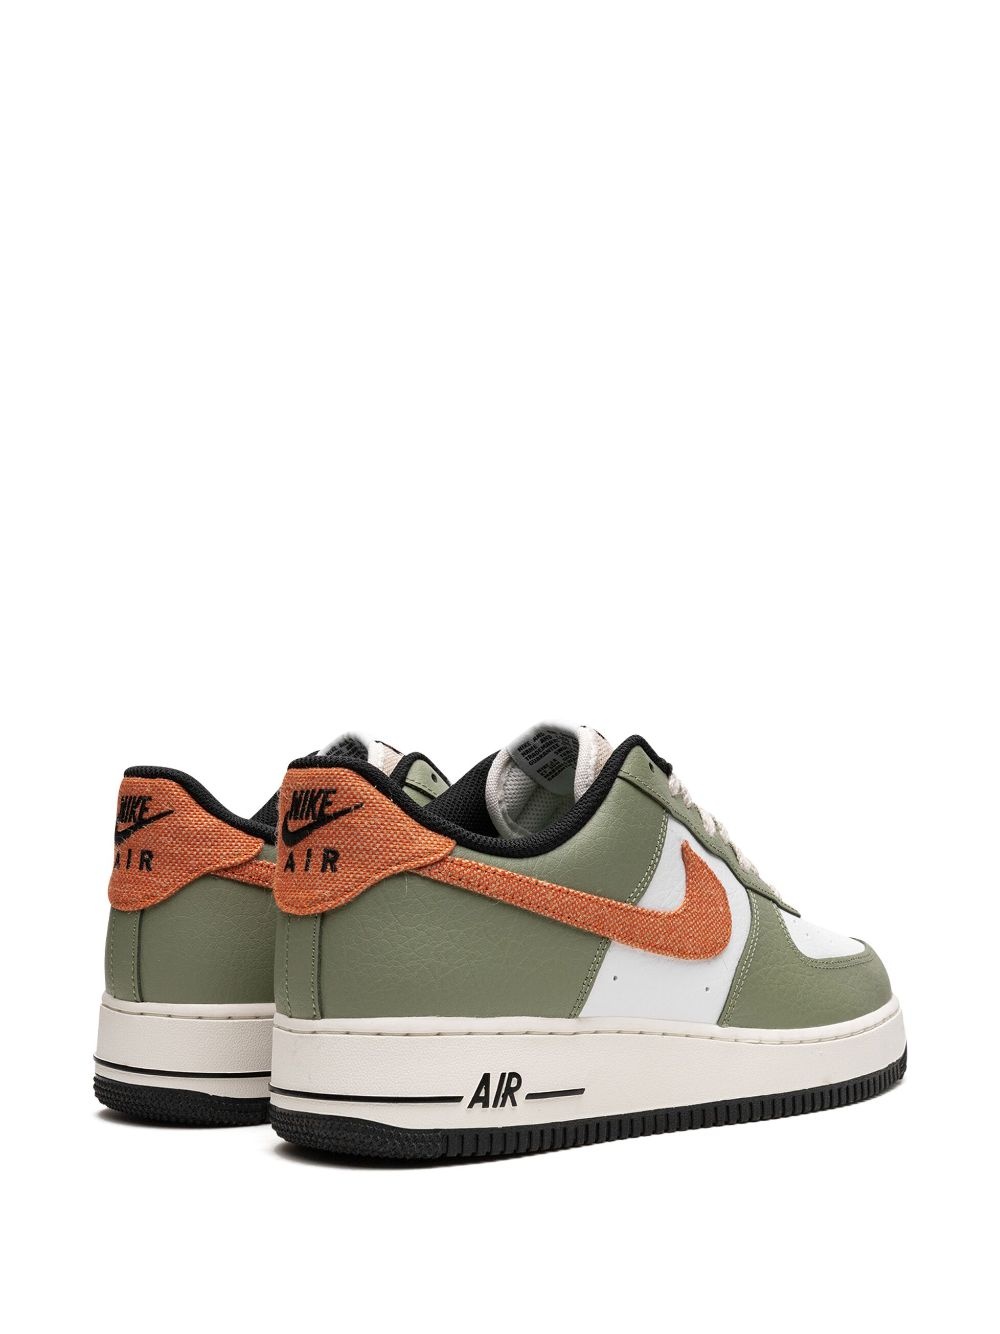 Air Force 1 Low "Oil Green" sneakers - 3